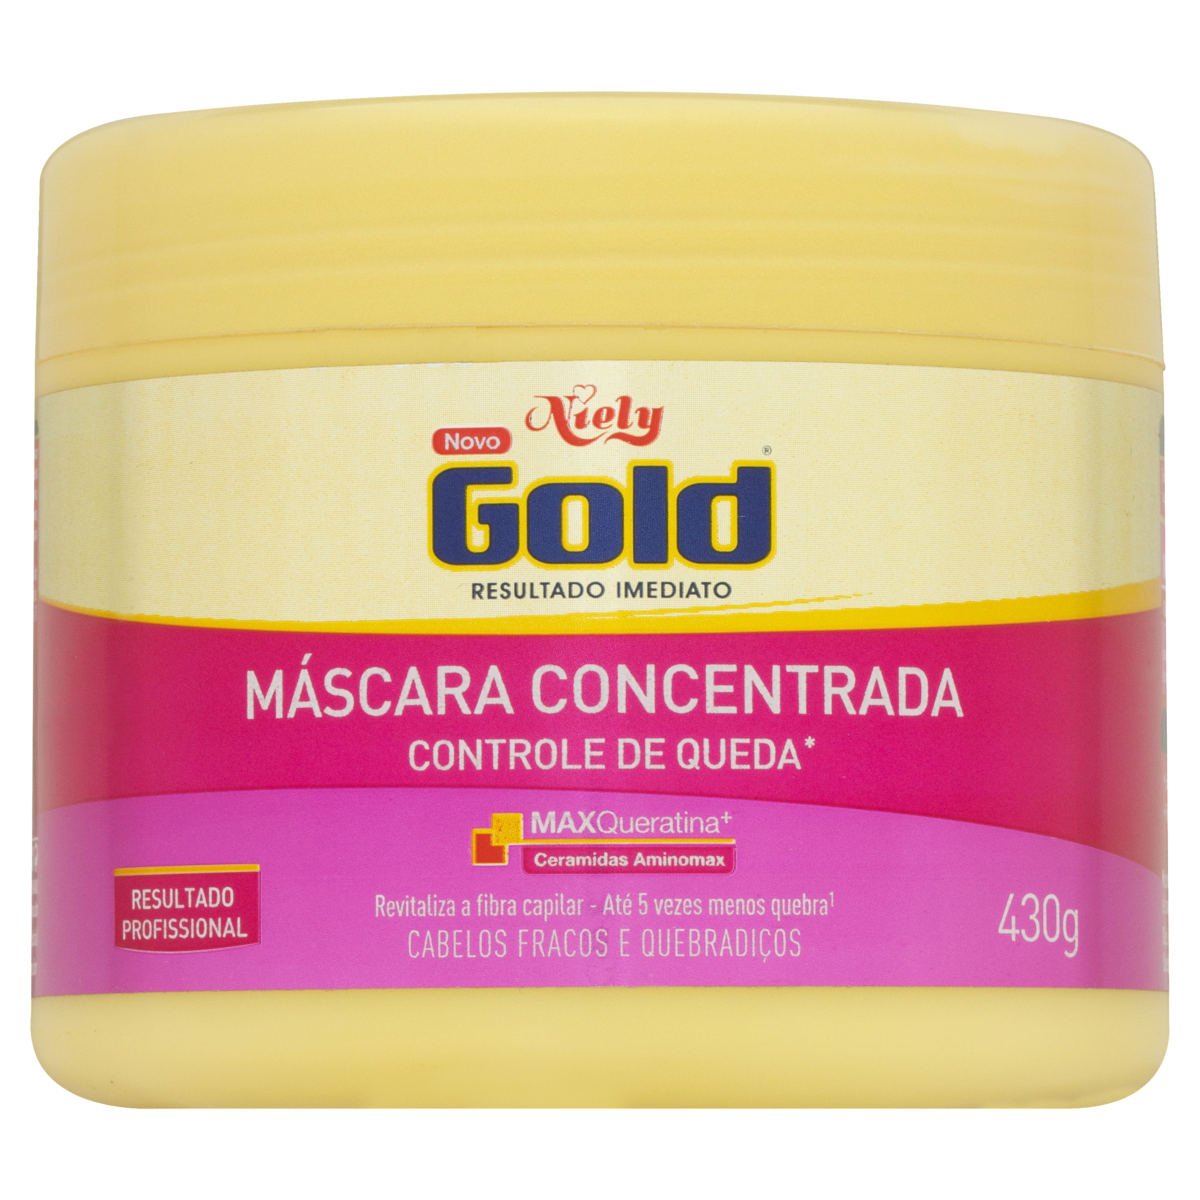 7896000722720 - MÁSCARA CONCENTRADA NIELY GOLD CONTROLE DE QUEDA POTE 430G